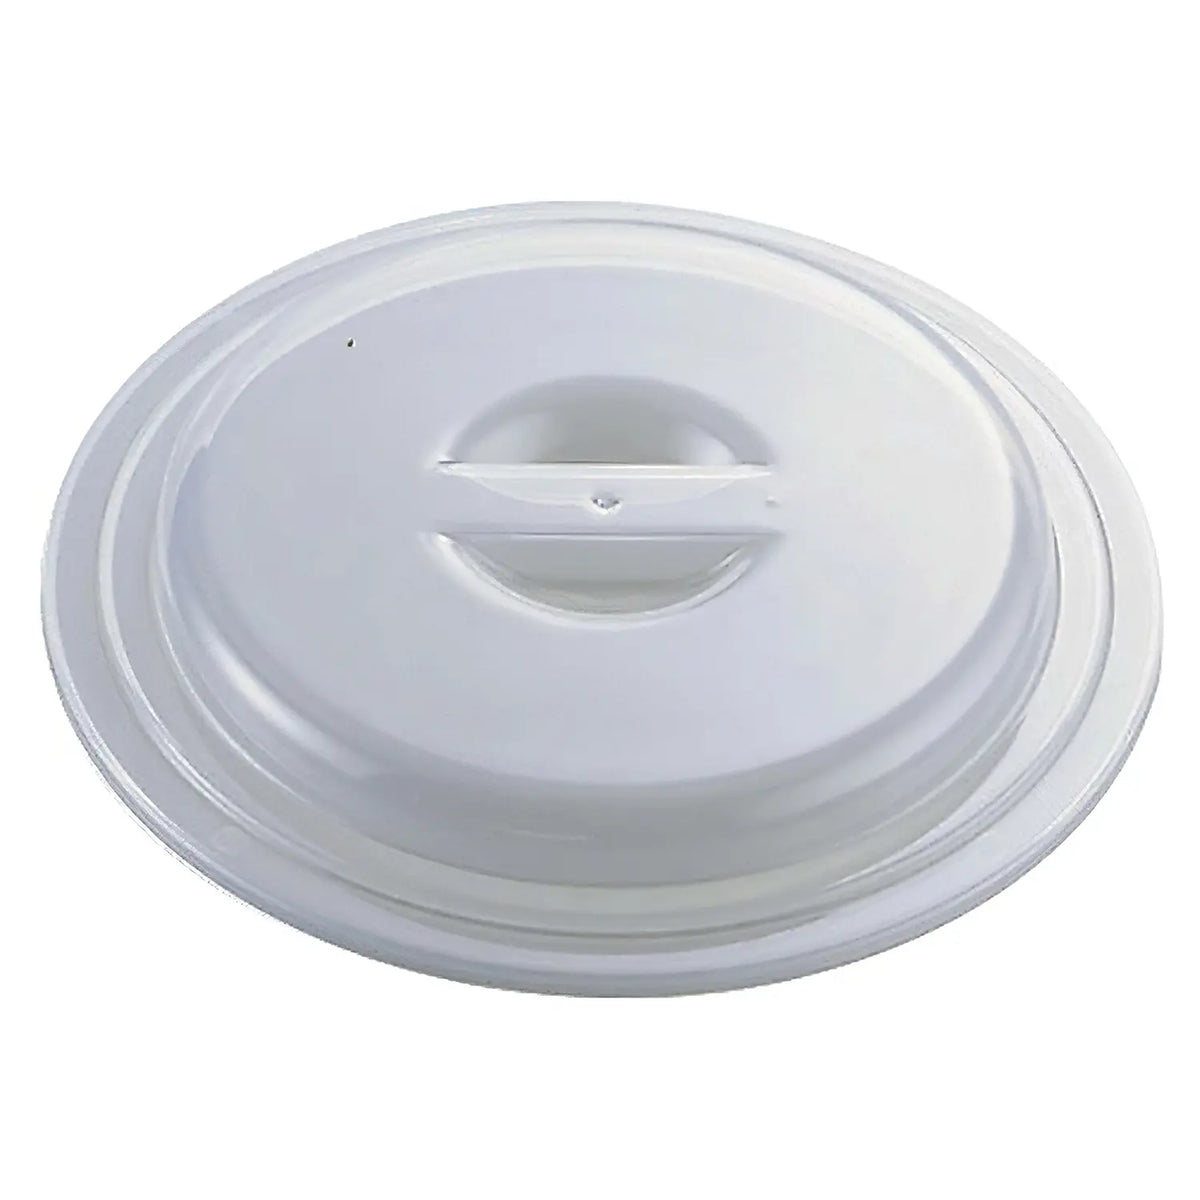 ENTEC Plastic Shallow Type Plate Cover 15cm